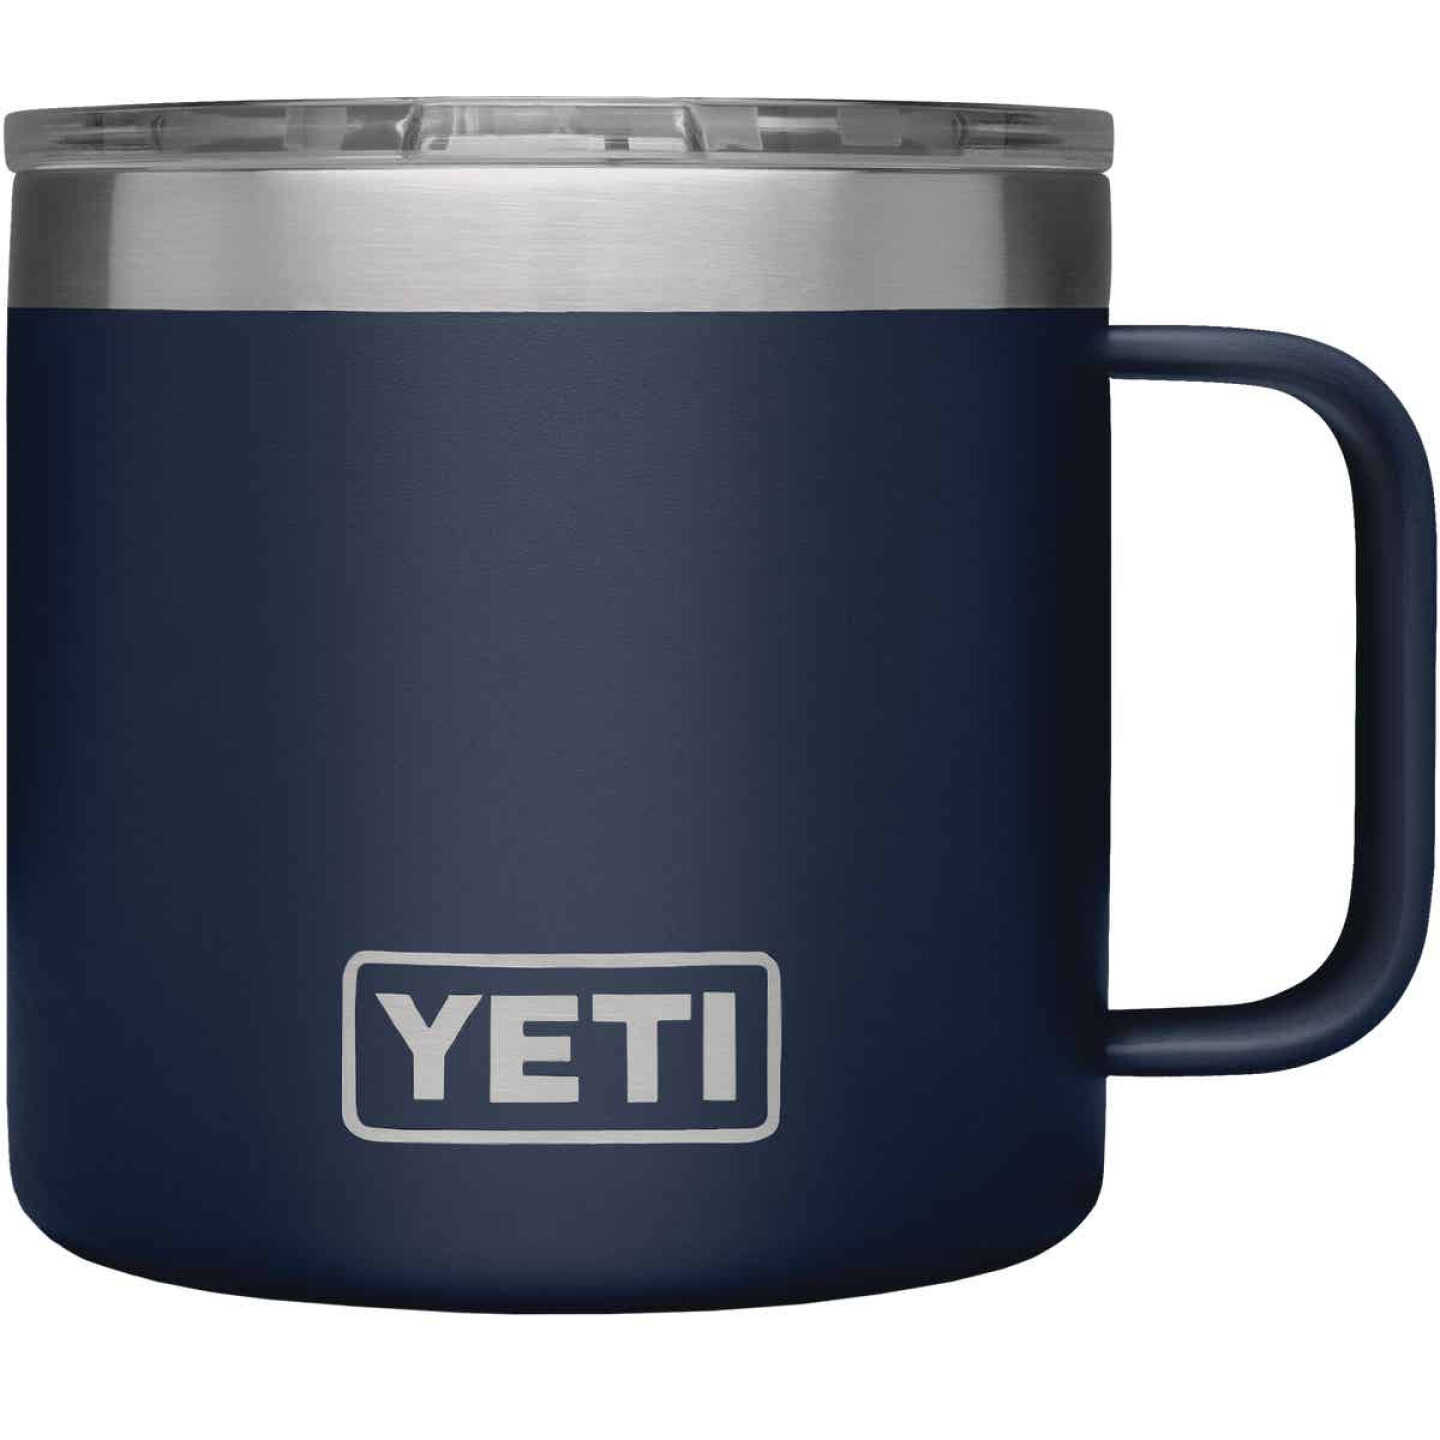 Yeti Rambler 6 oz. Espresso Stackable Mug 2 Pack - Seafoam